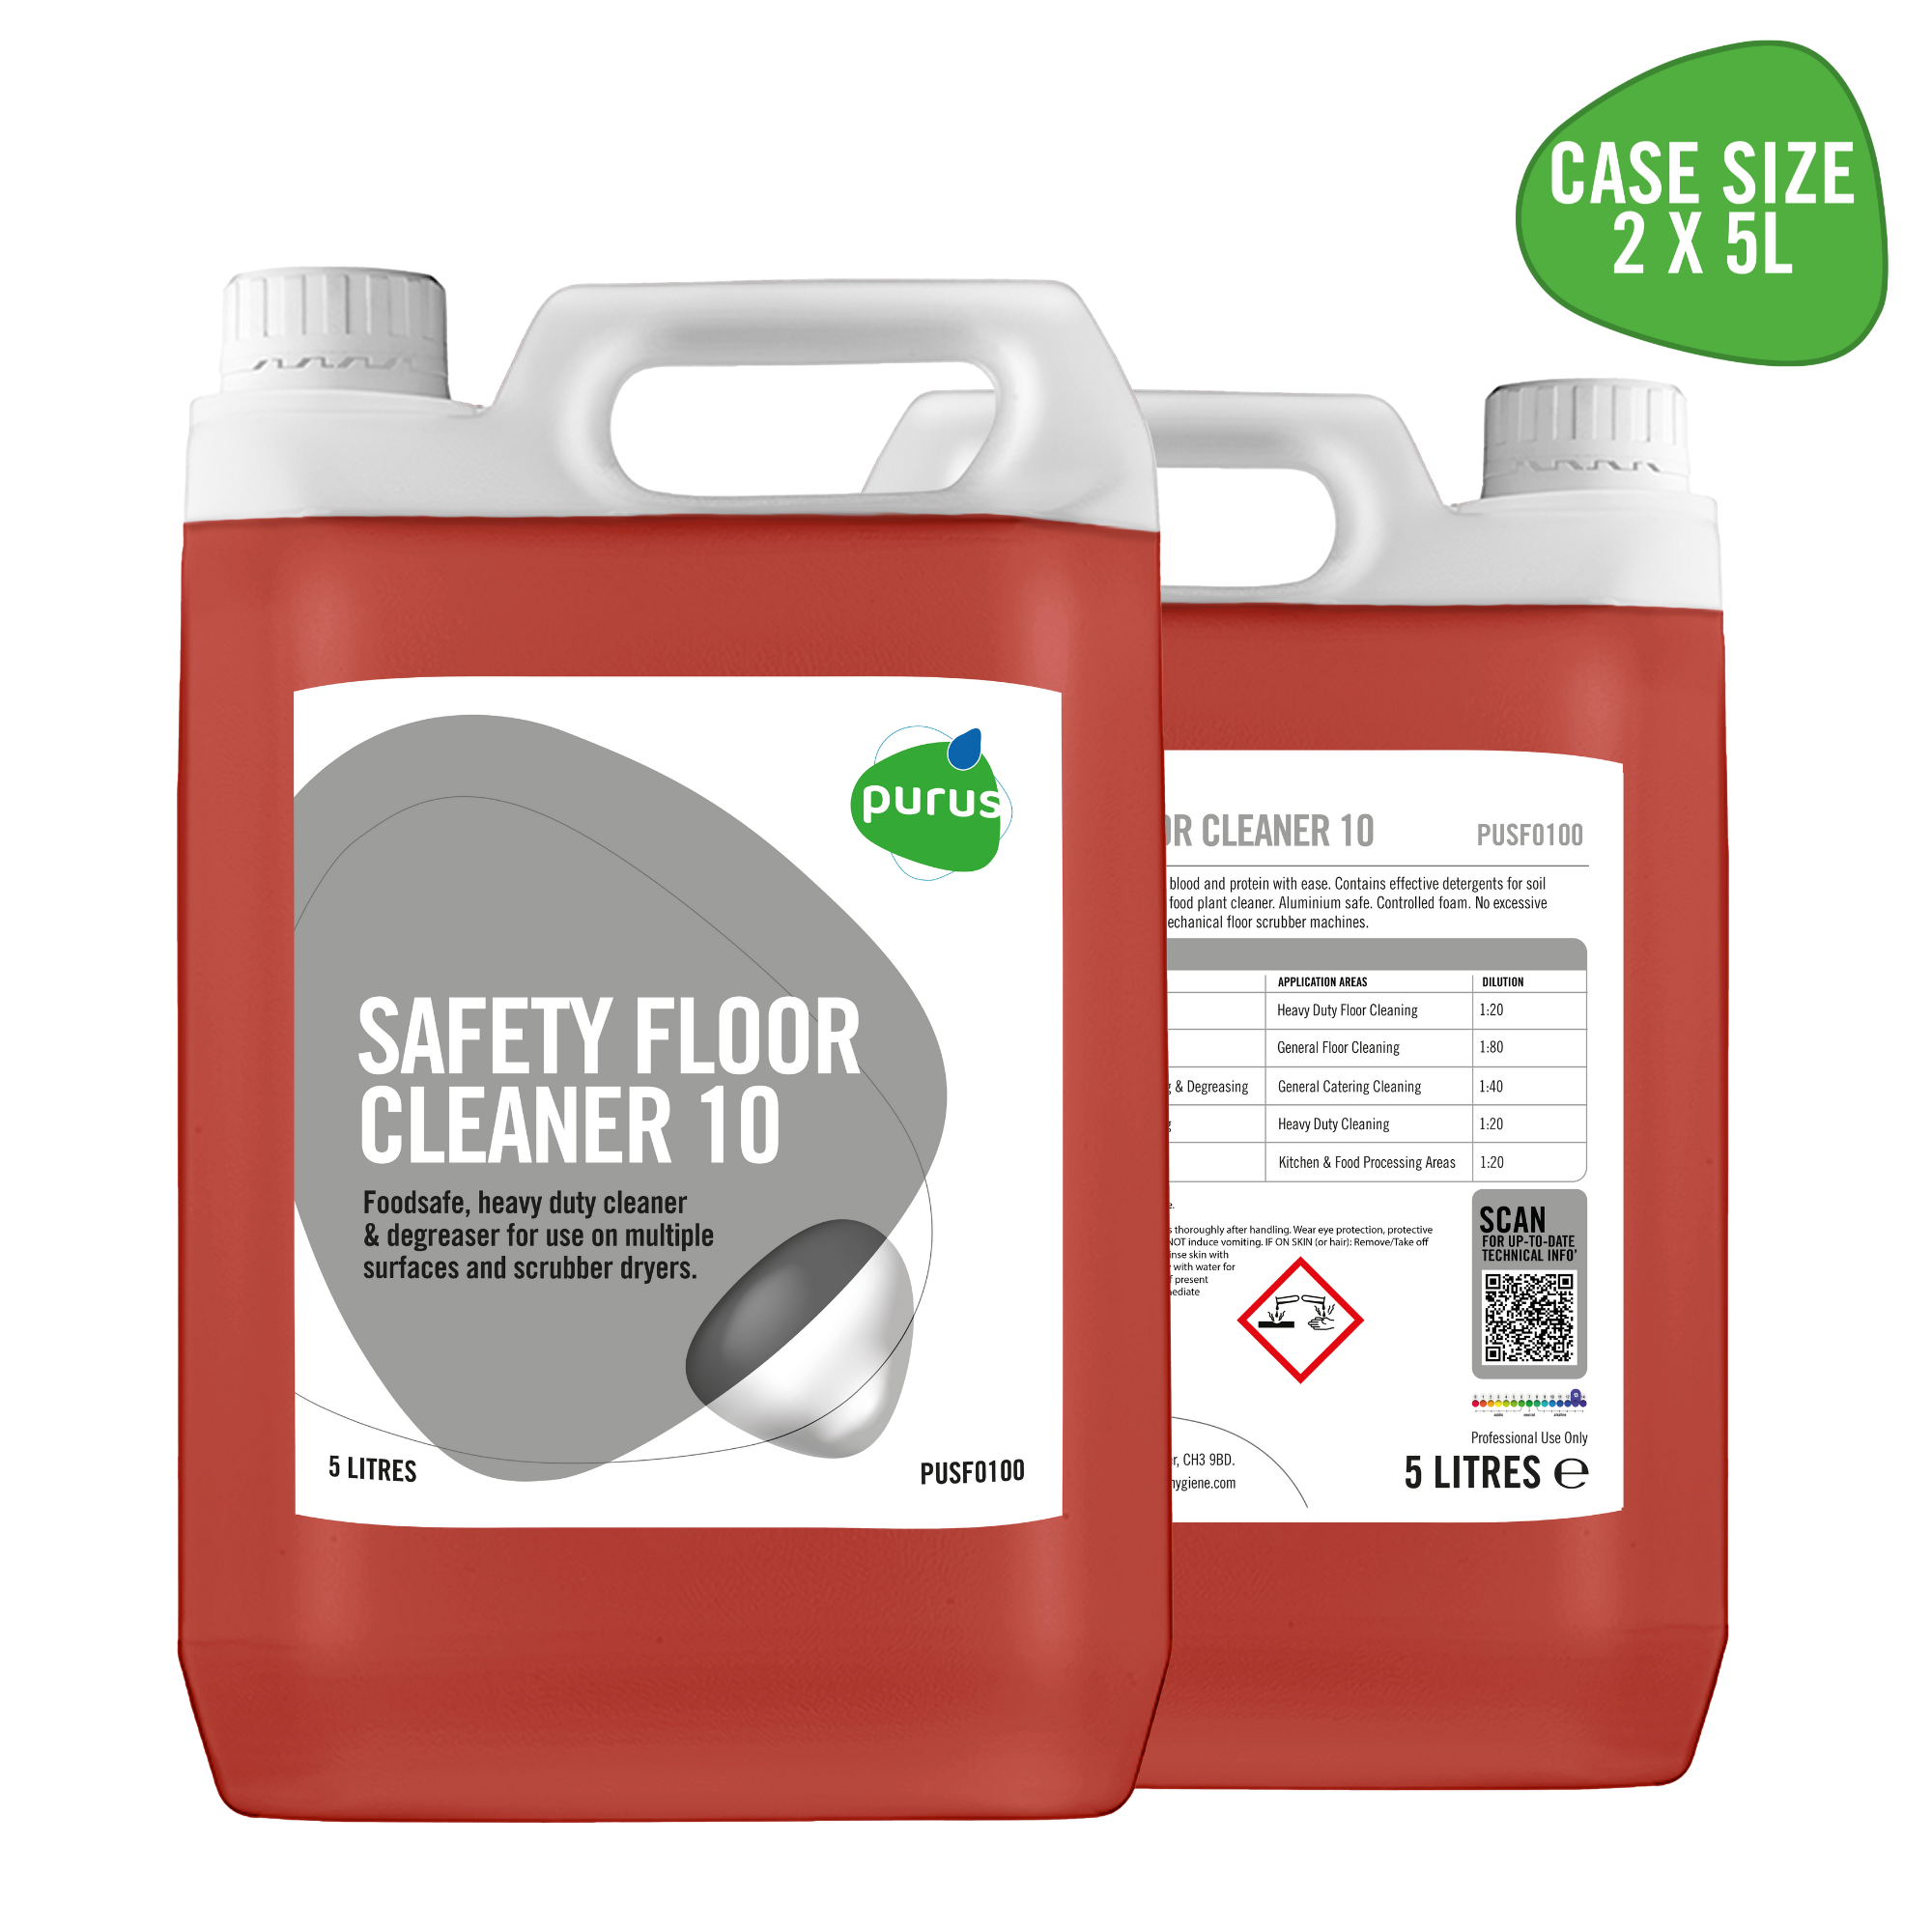 Purus Foodsafe Safety Floor Cleaner 10 | 2 x 5 Ltr